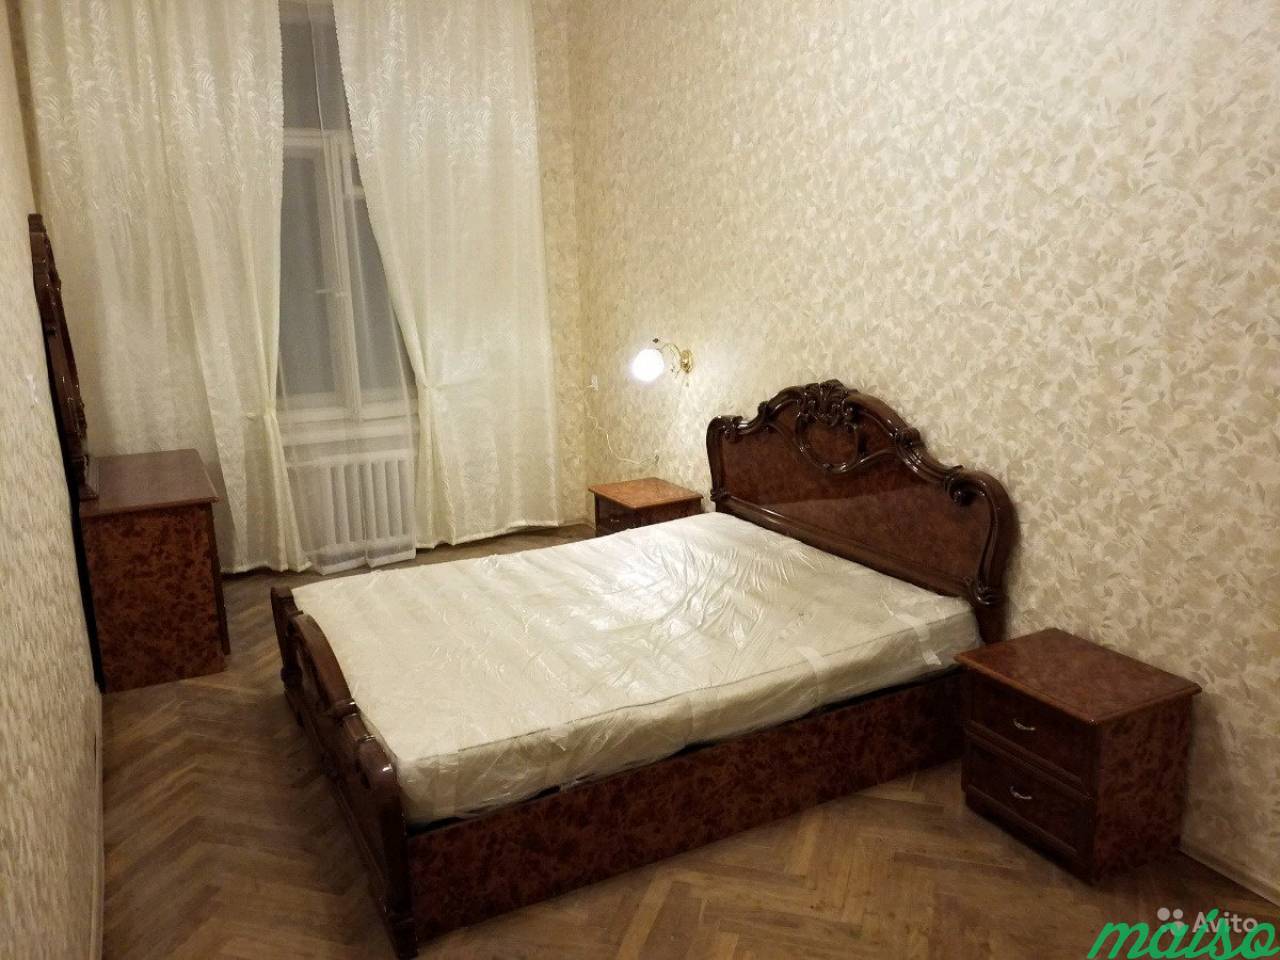 Комната 16 м² в 5-к, 3/5 эт. в Санкт-Петербурге. Фото 9